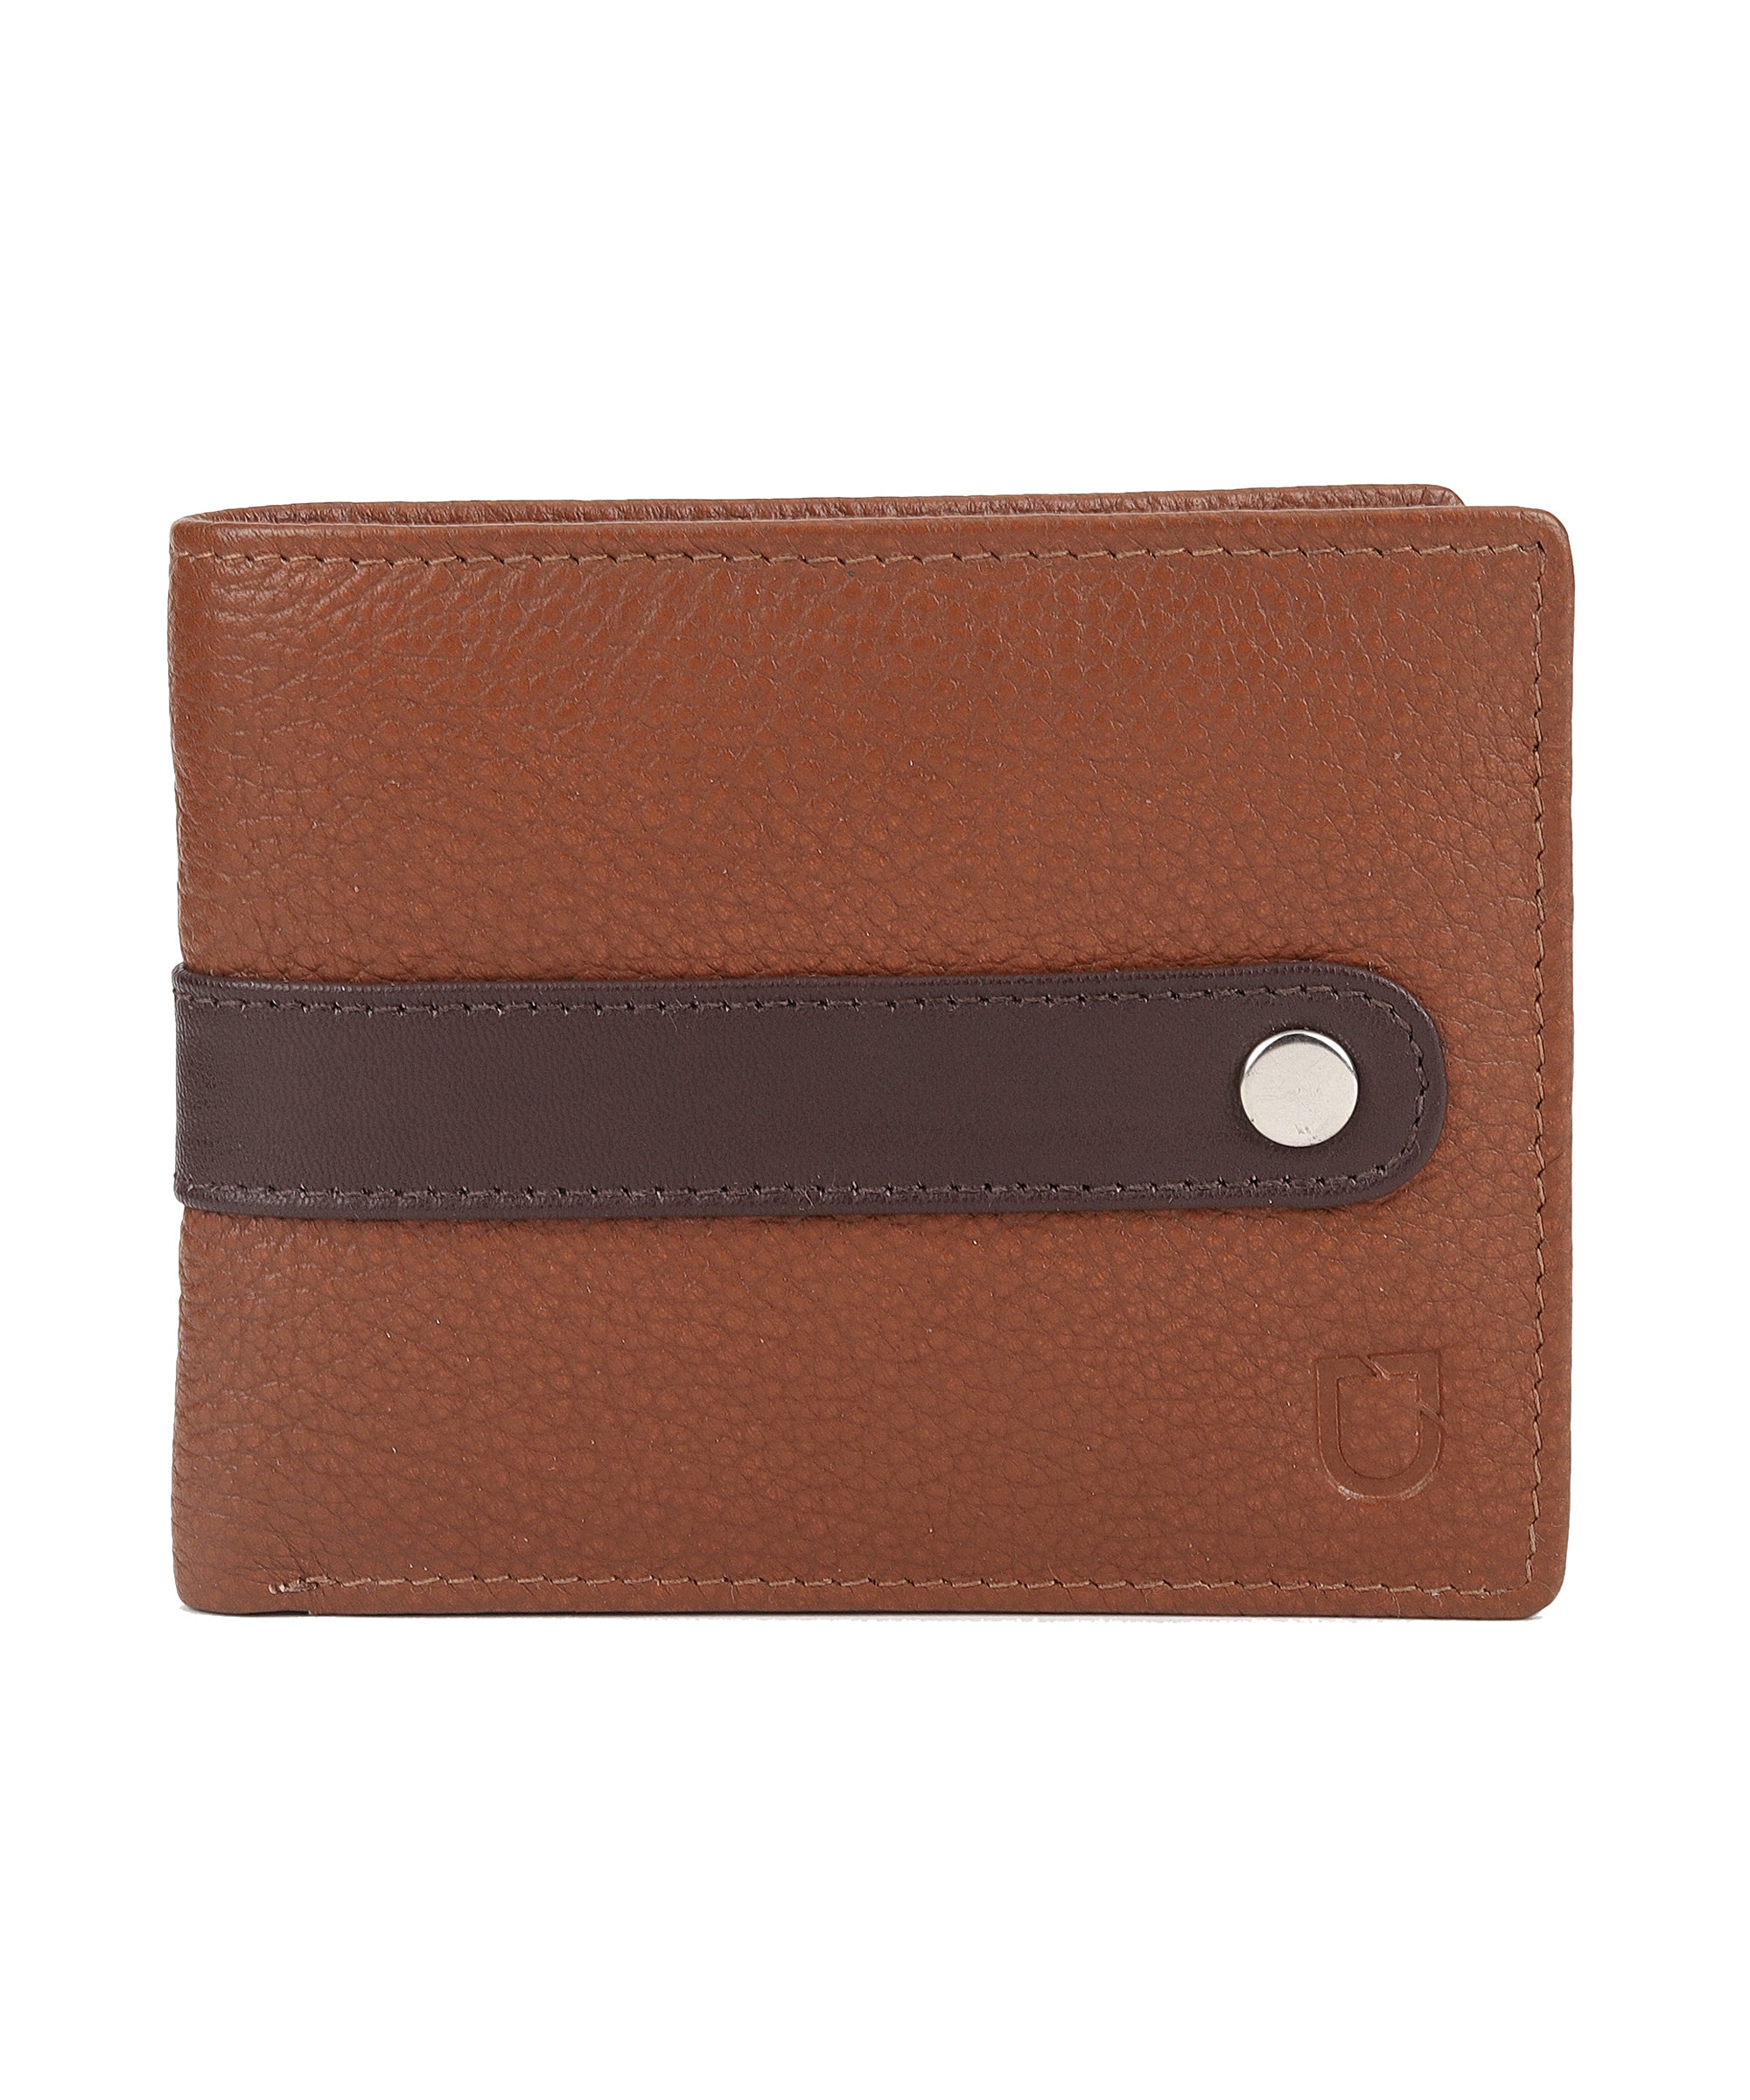 Urbano Fashion Men's Casual, Formal Tan Genuine Leather Wallet-4 Card Slots